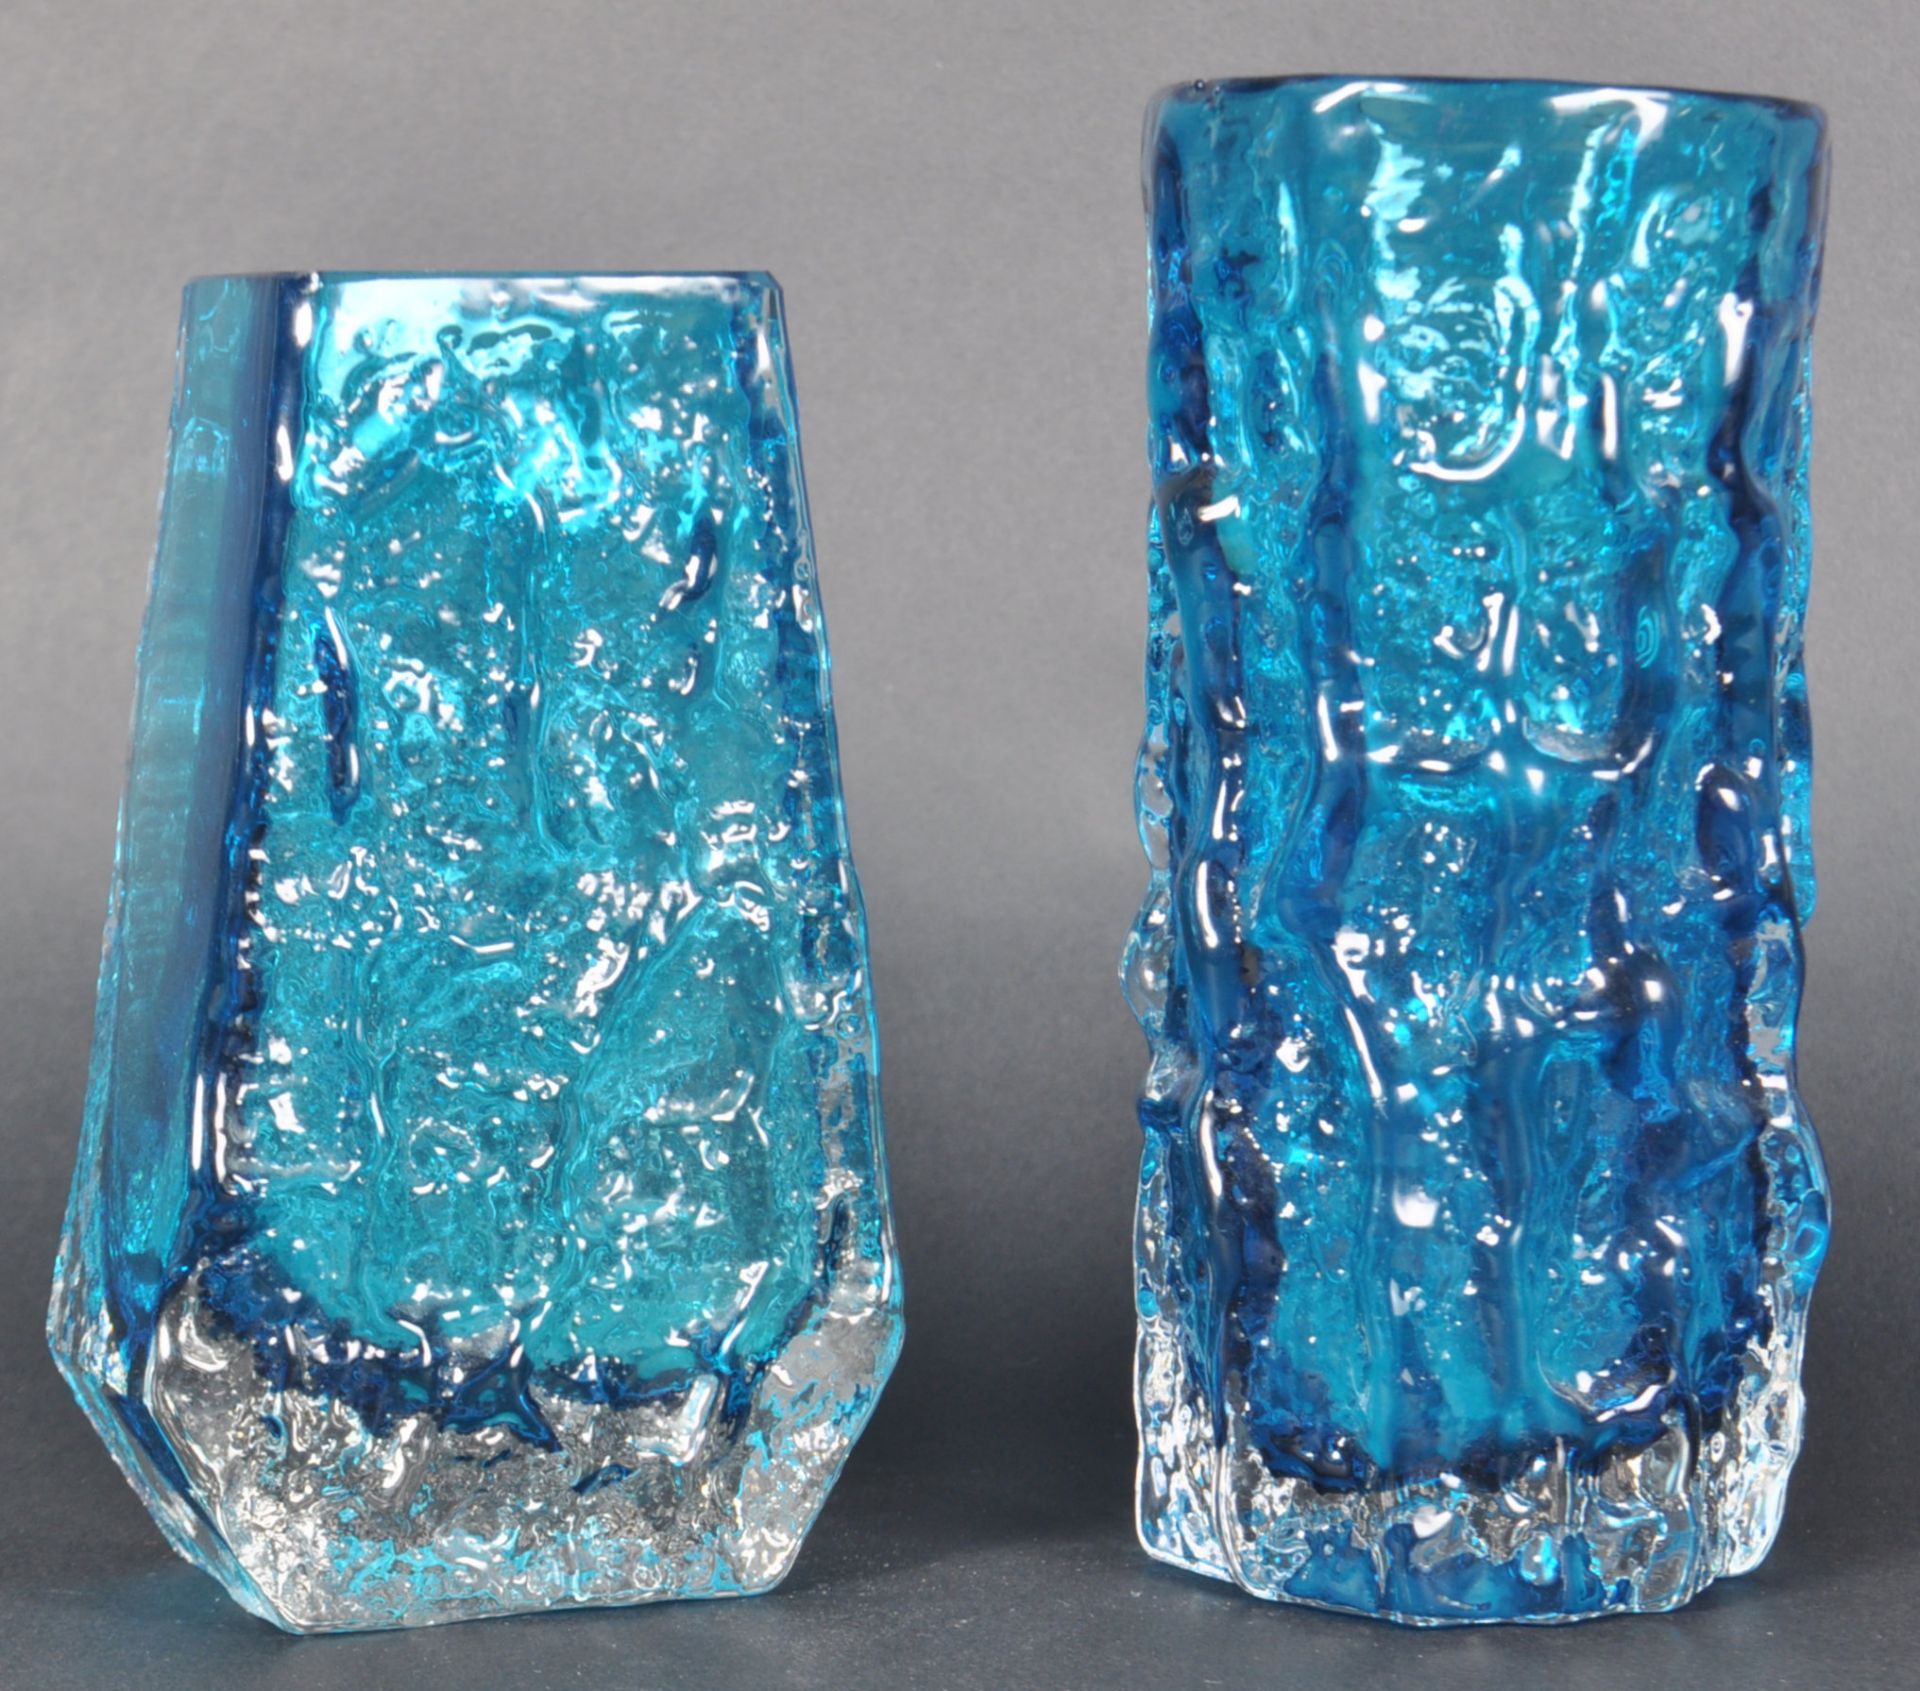 GEOFFREY BAXTER - WHITEFRIARS - TWO PIECES OF STUDIO GLASS